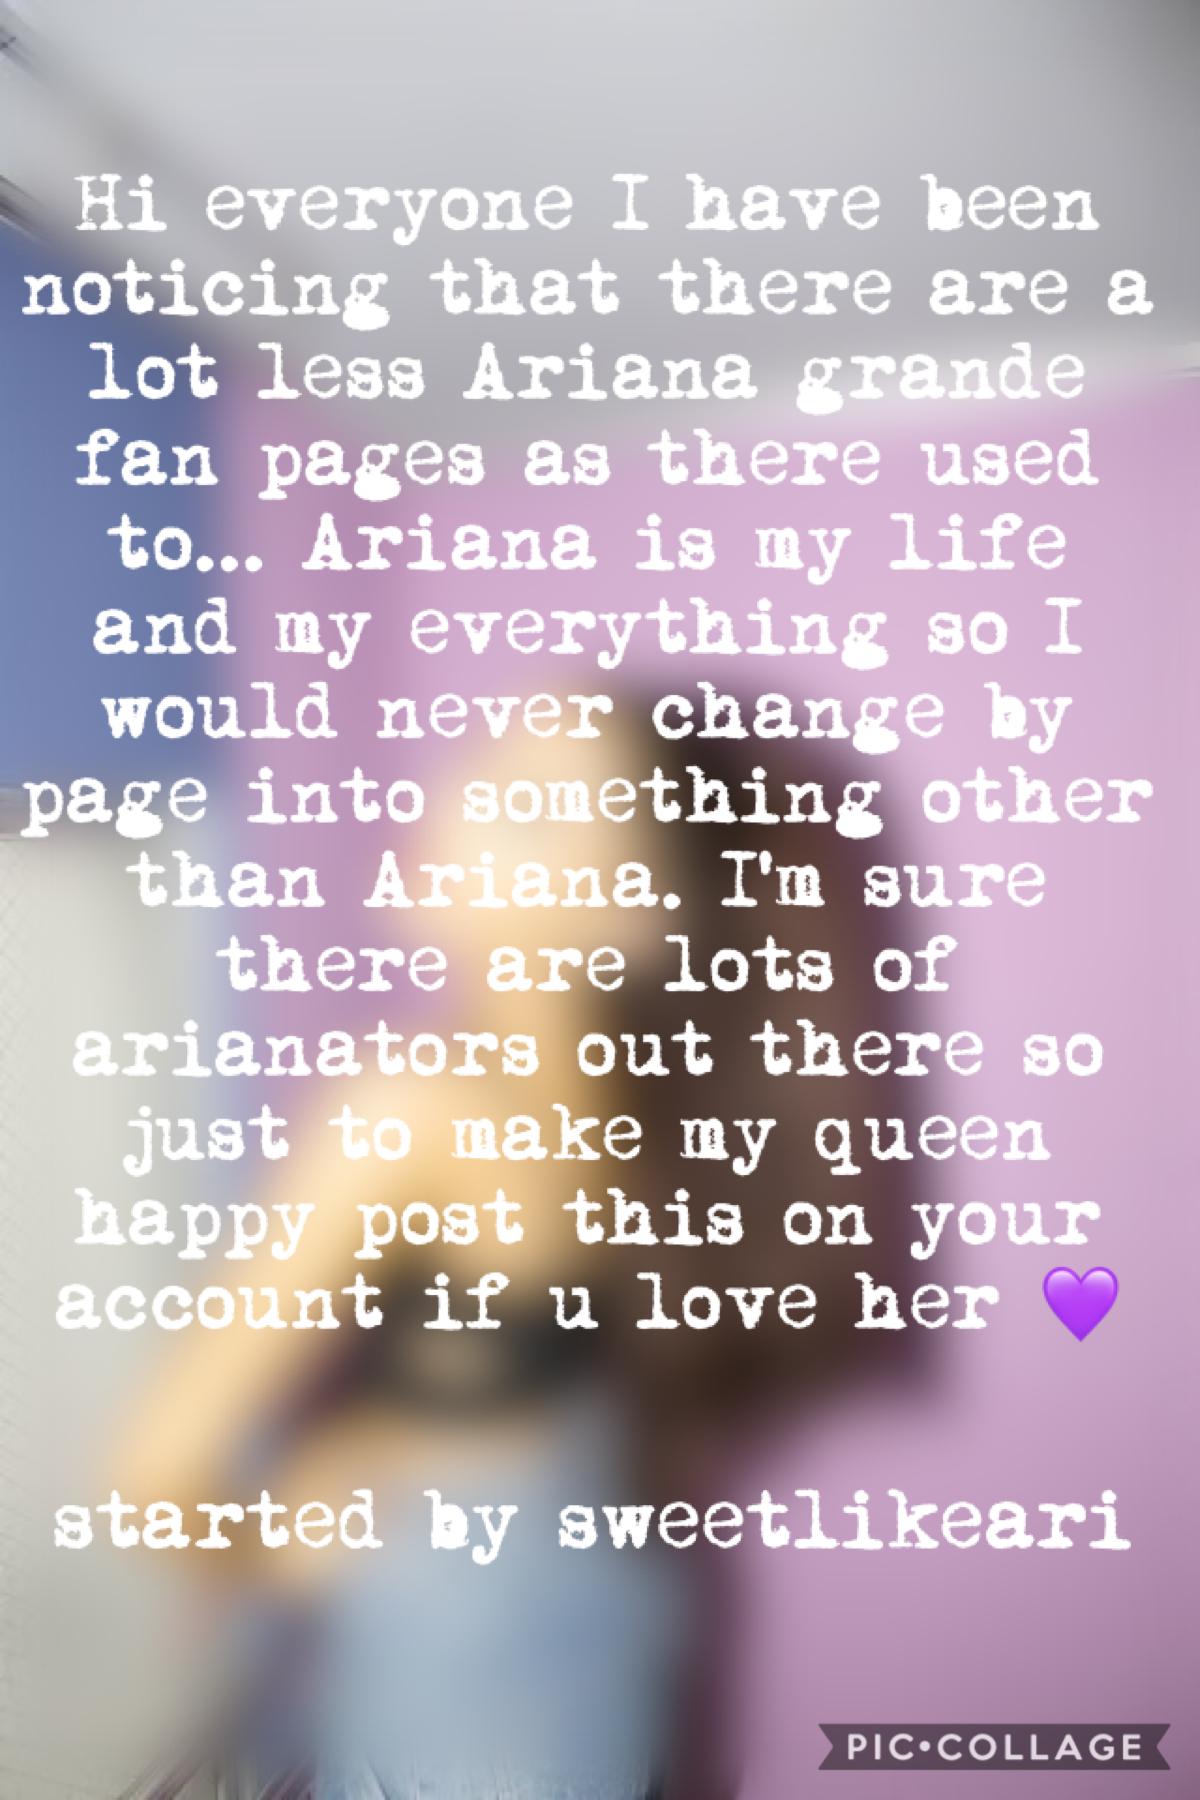 Please repost 💜

Ariana is my life, my everything, my queen, my idol, my world, I LOVE HER SOOOO MUCHHHH💜🦋